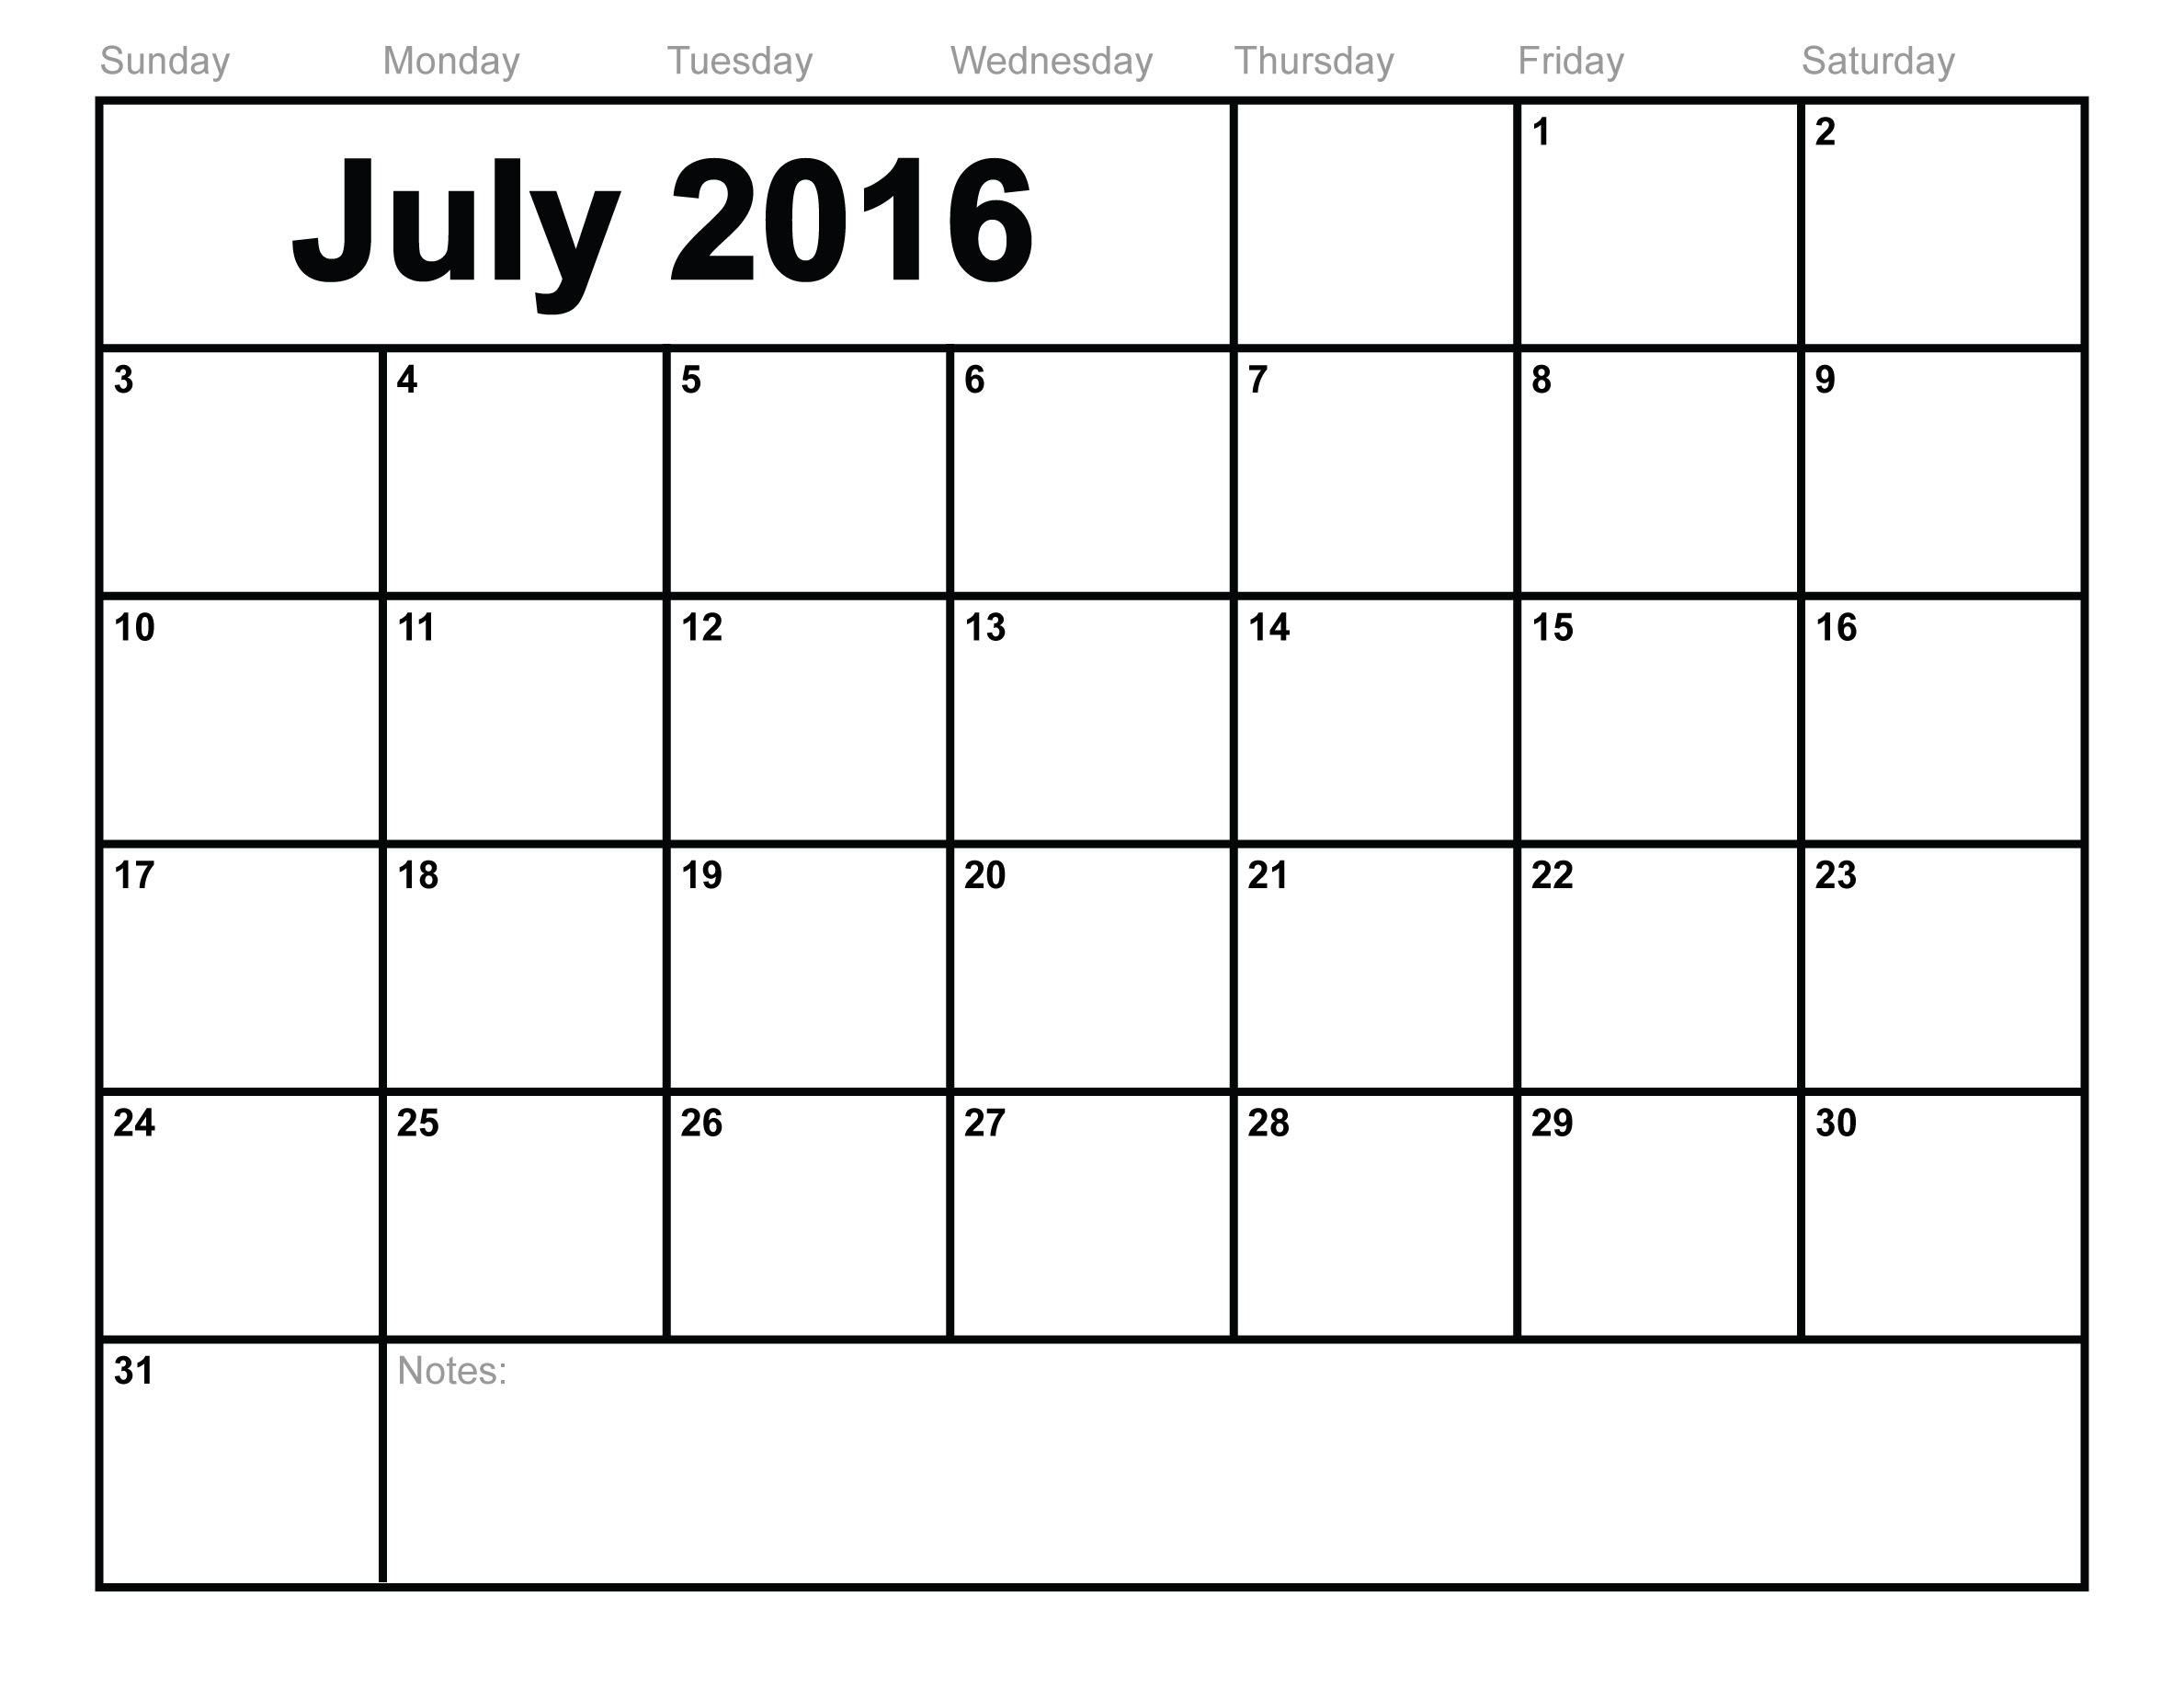 July 2016 Calendar - Fotolip.com Rich image and wallpaper